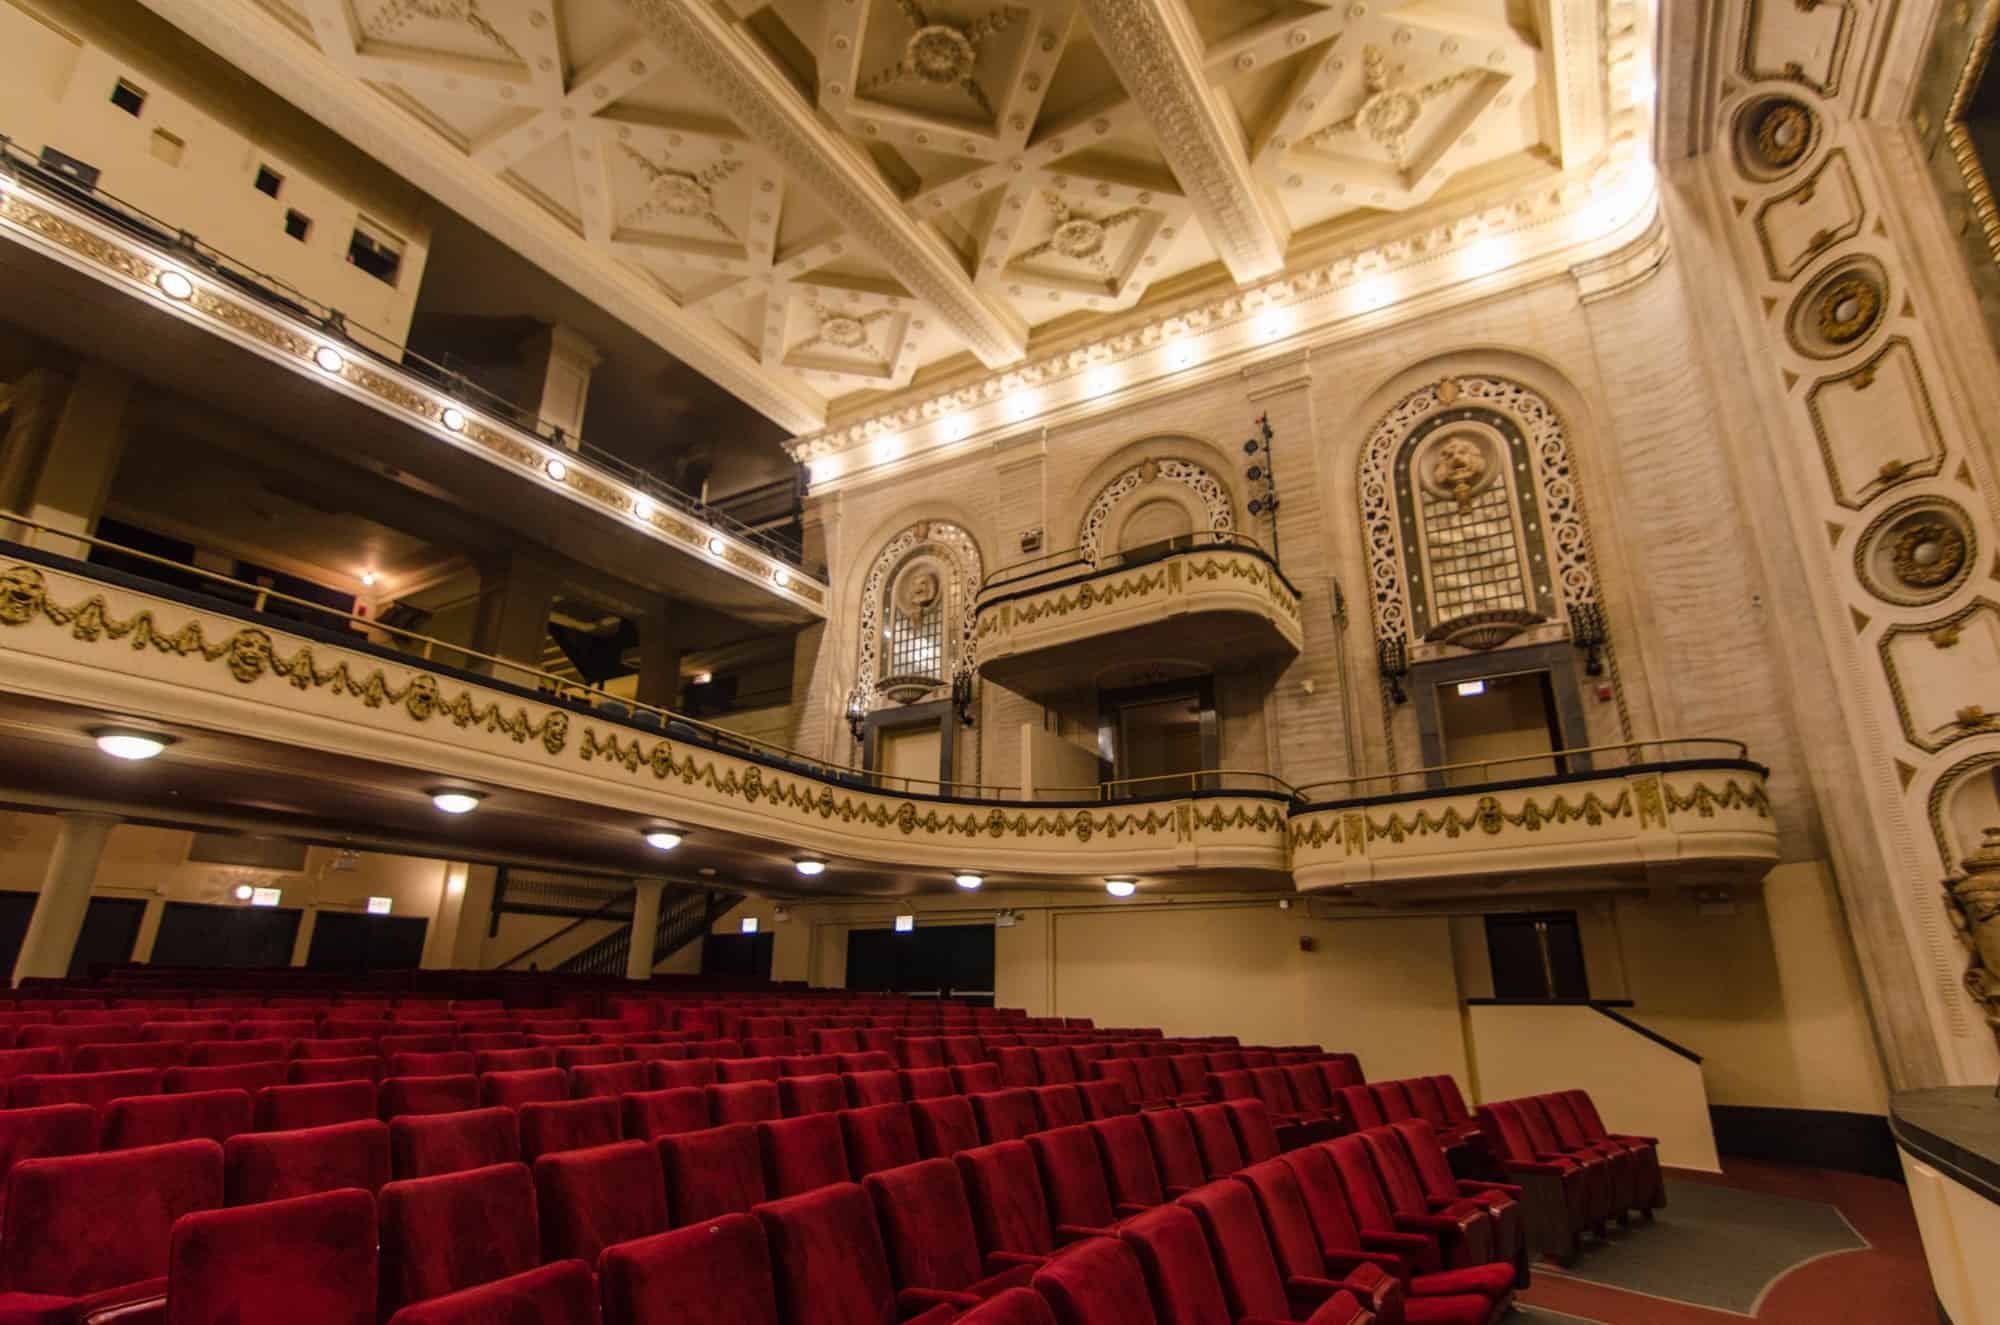 Image Description: The auditorium of the Studebaker Theater.